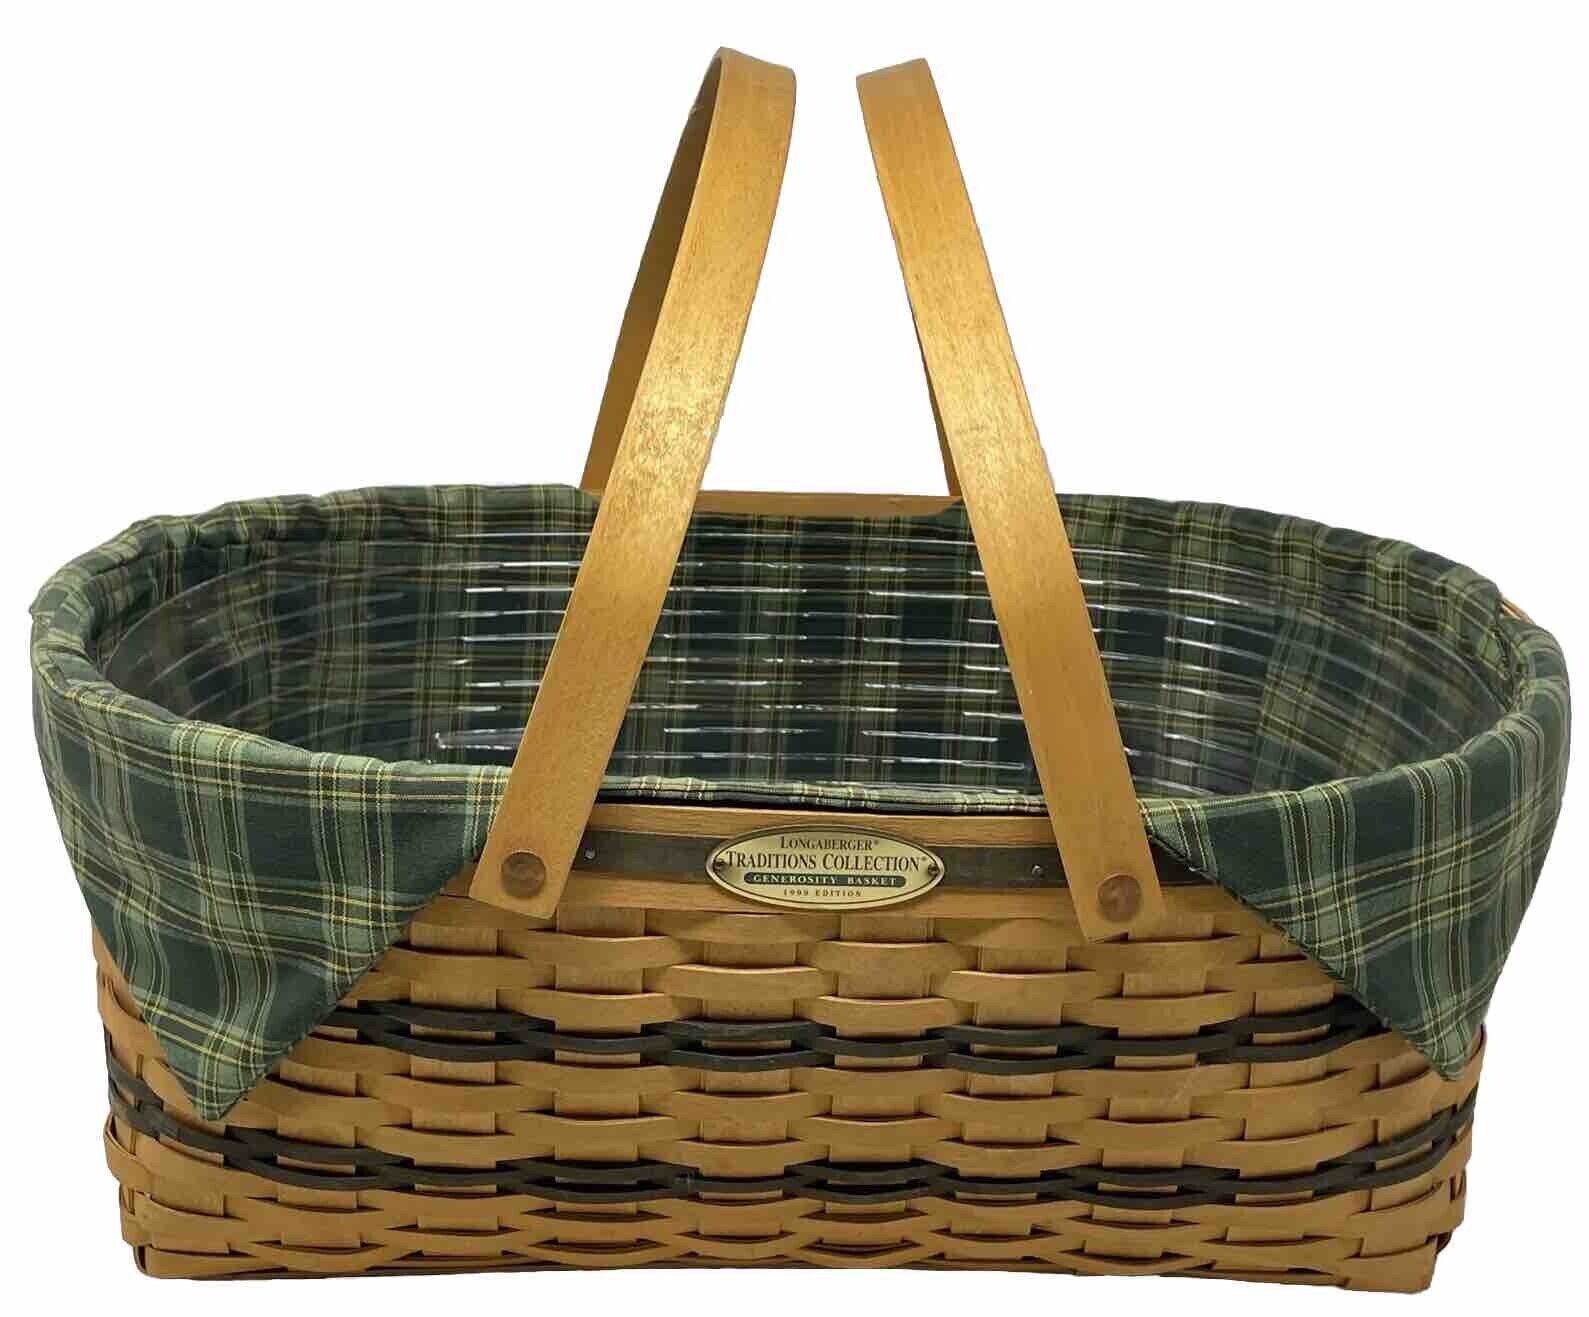 Longaberger Traditions Collection Generosity Basket Protector & Liner 1999